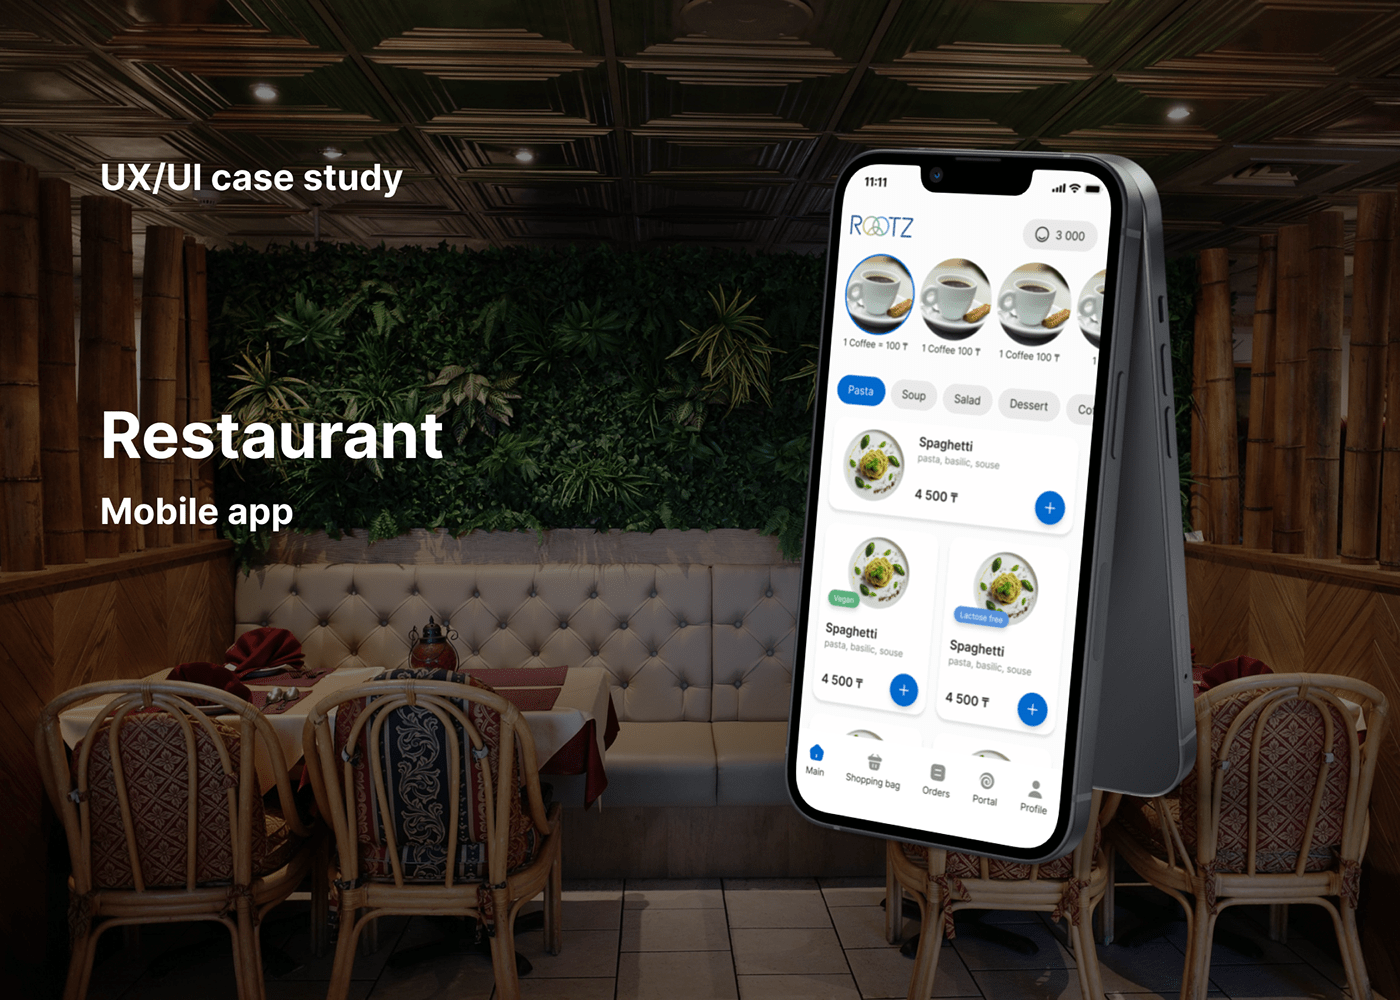 Case Study UI/UX user interface user experience restaurant information architecture  user flow Mobile app ux/ui app design